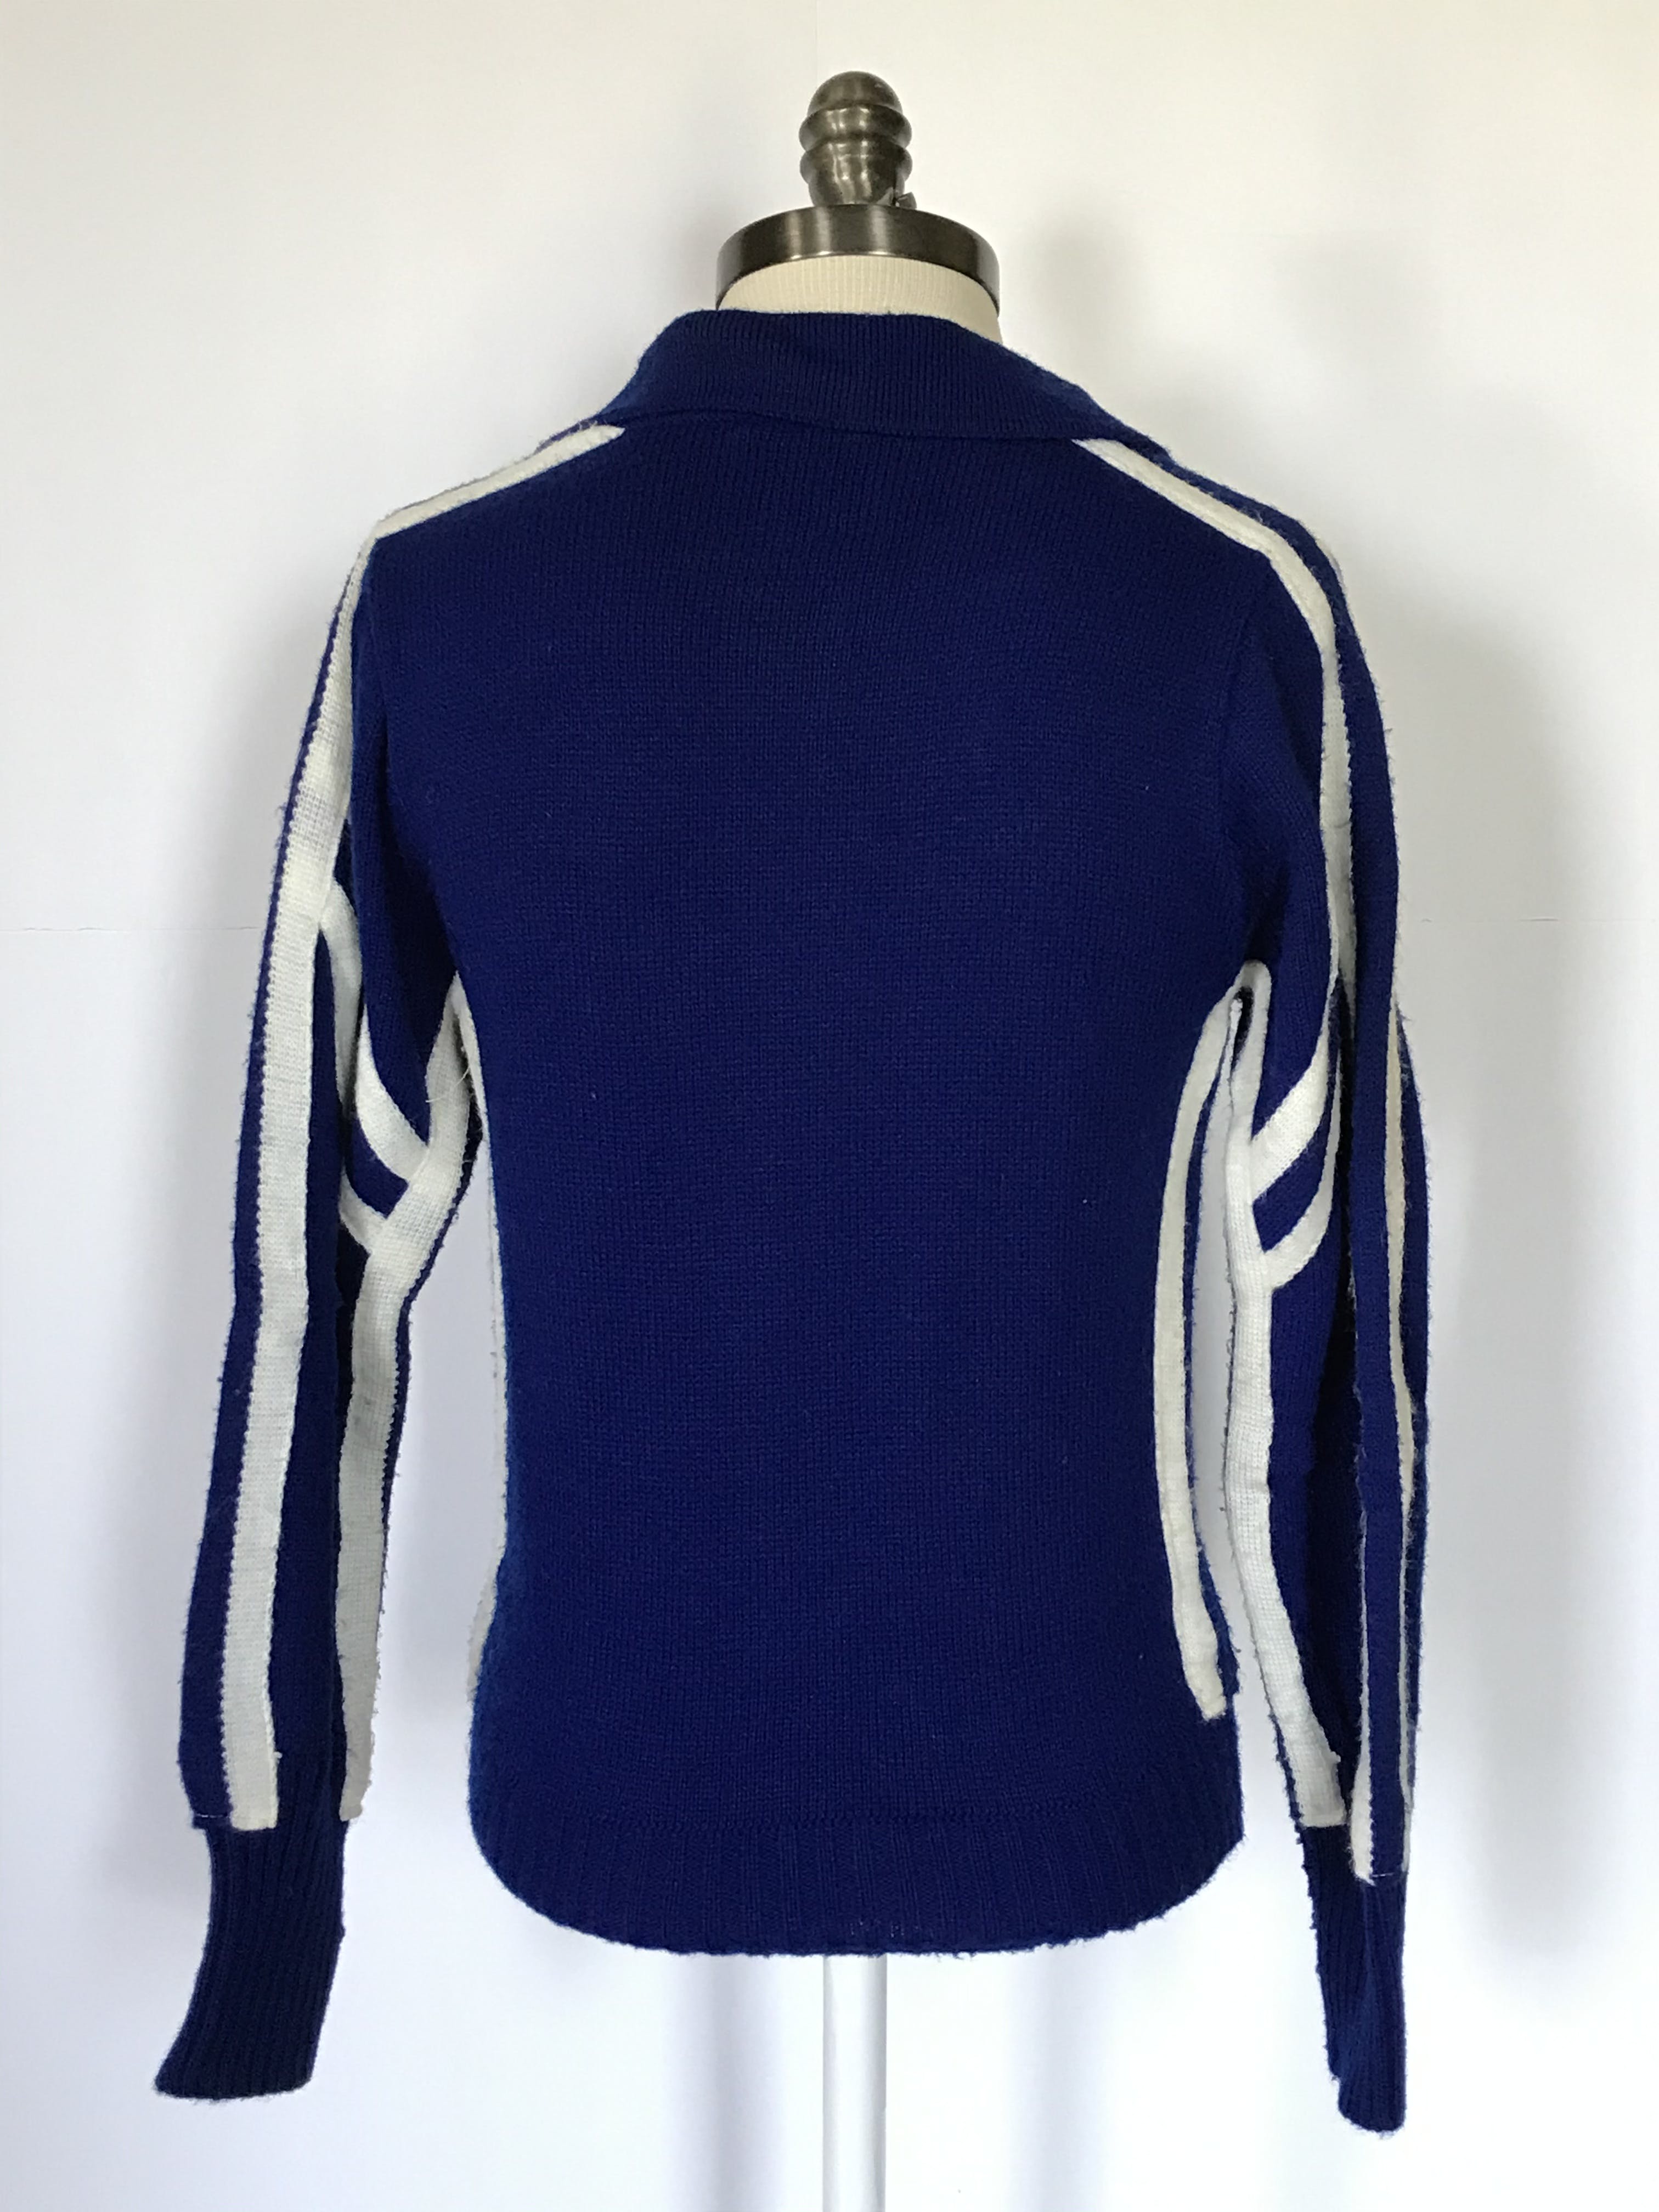 Vintage 80's Blue Cheerleader Sweater with Collar by Cheerleader Supply ...